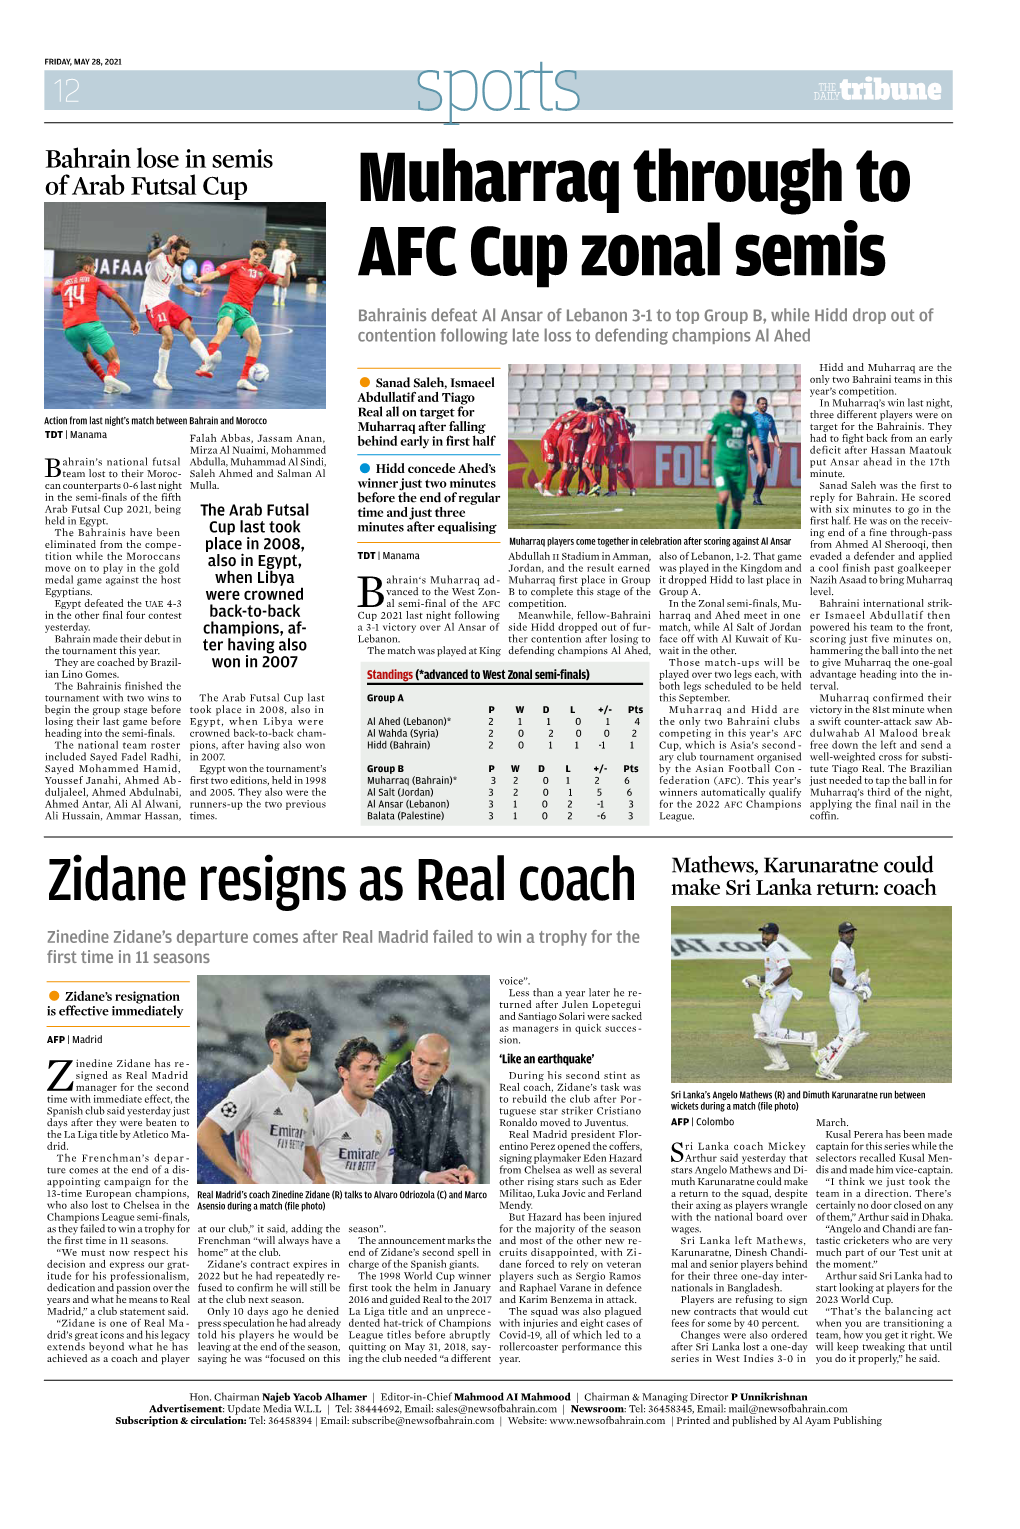 Muharraq Through to AFC Cup Zonal Semis